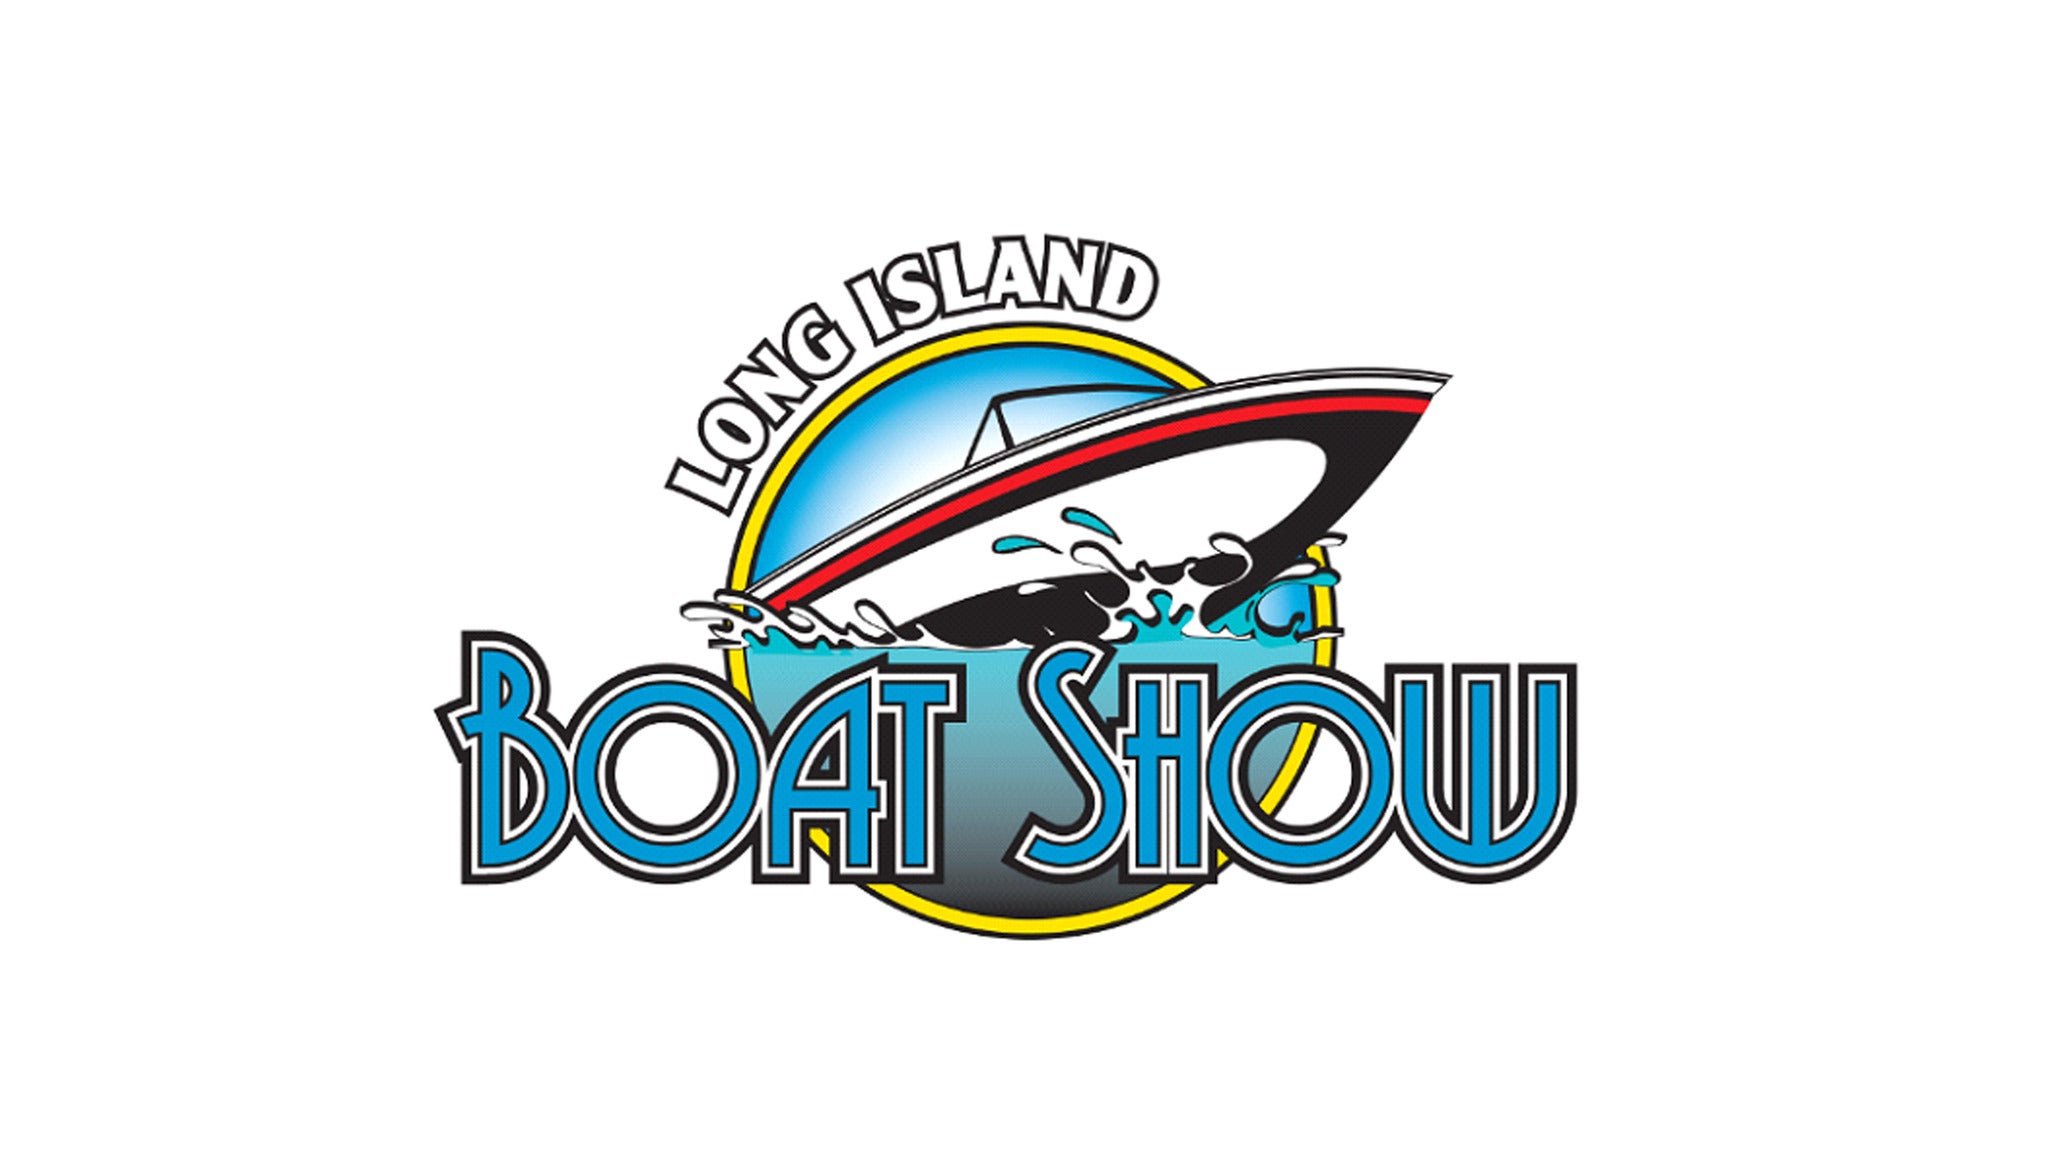 Long Island Boat Show presale information on freepresalepasswords.com